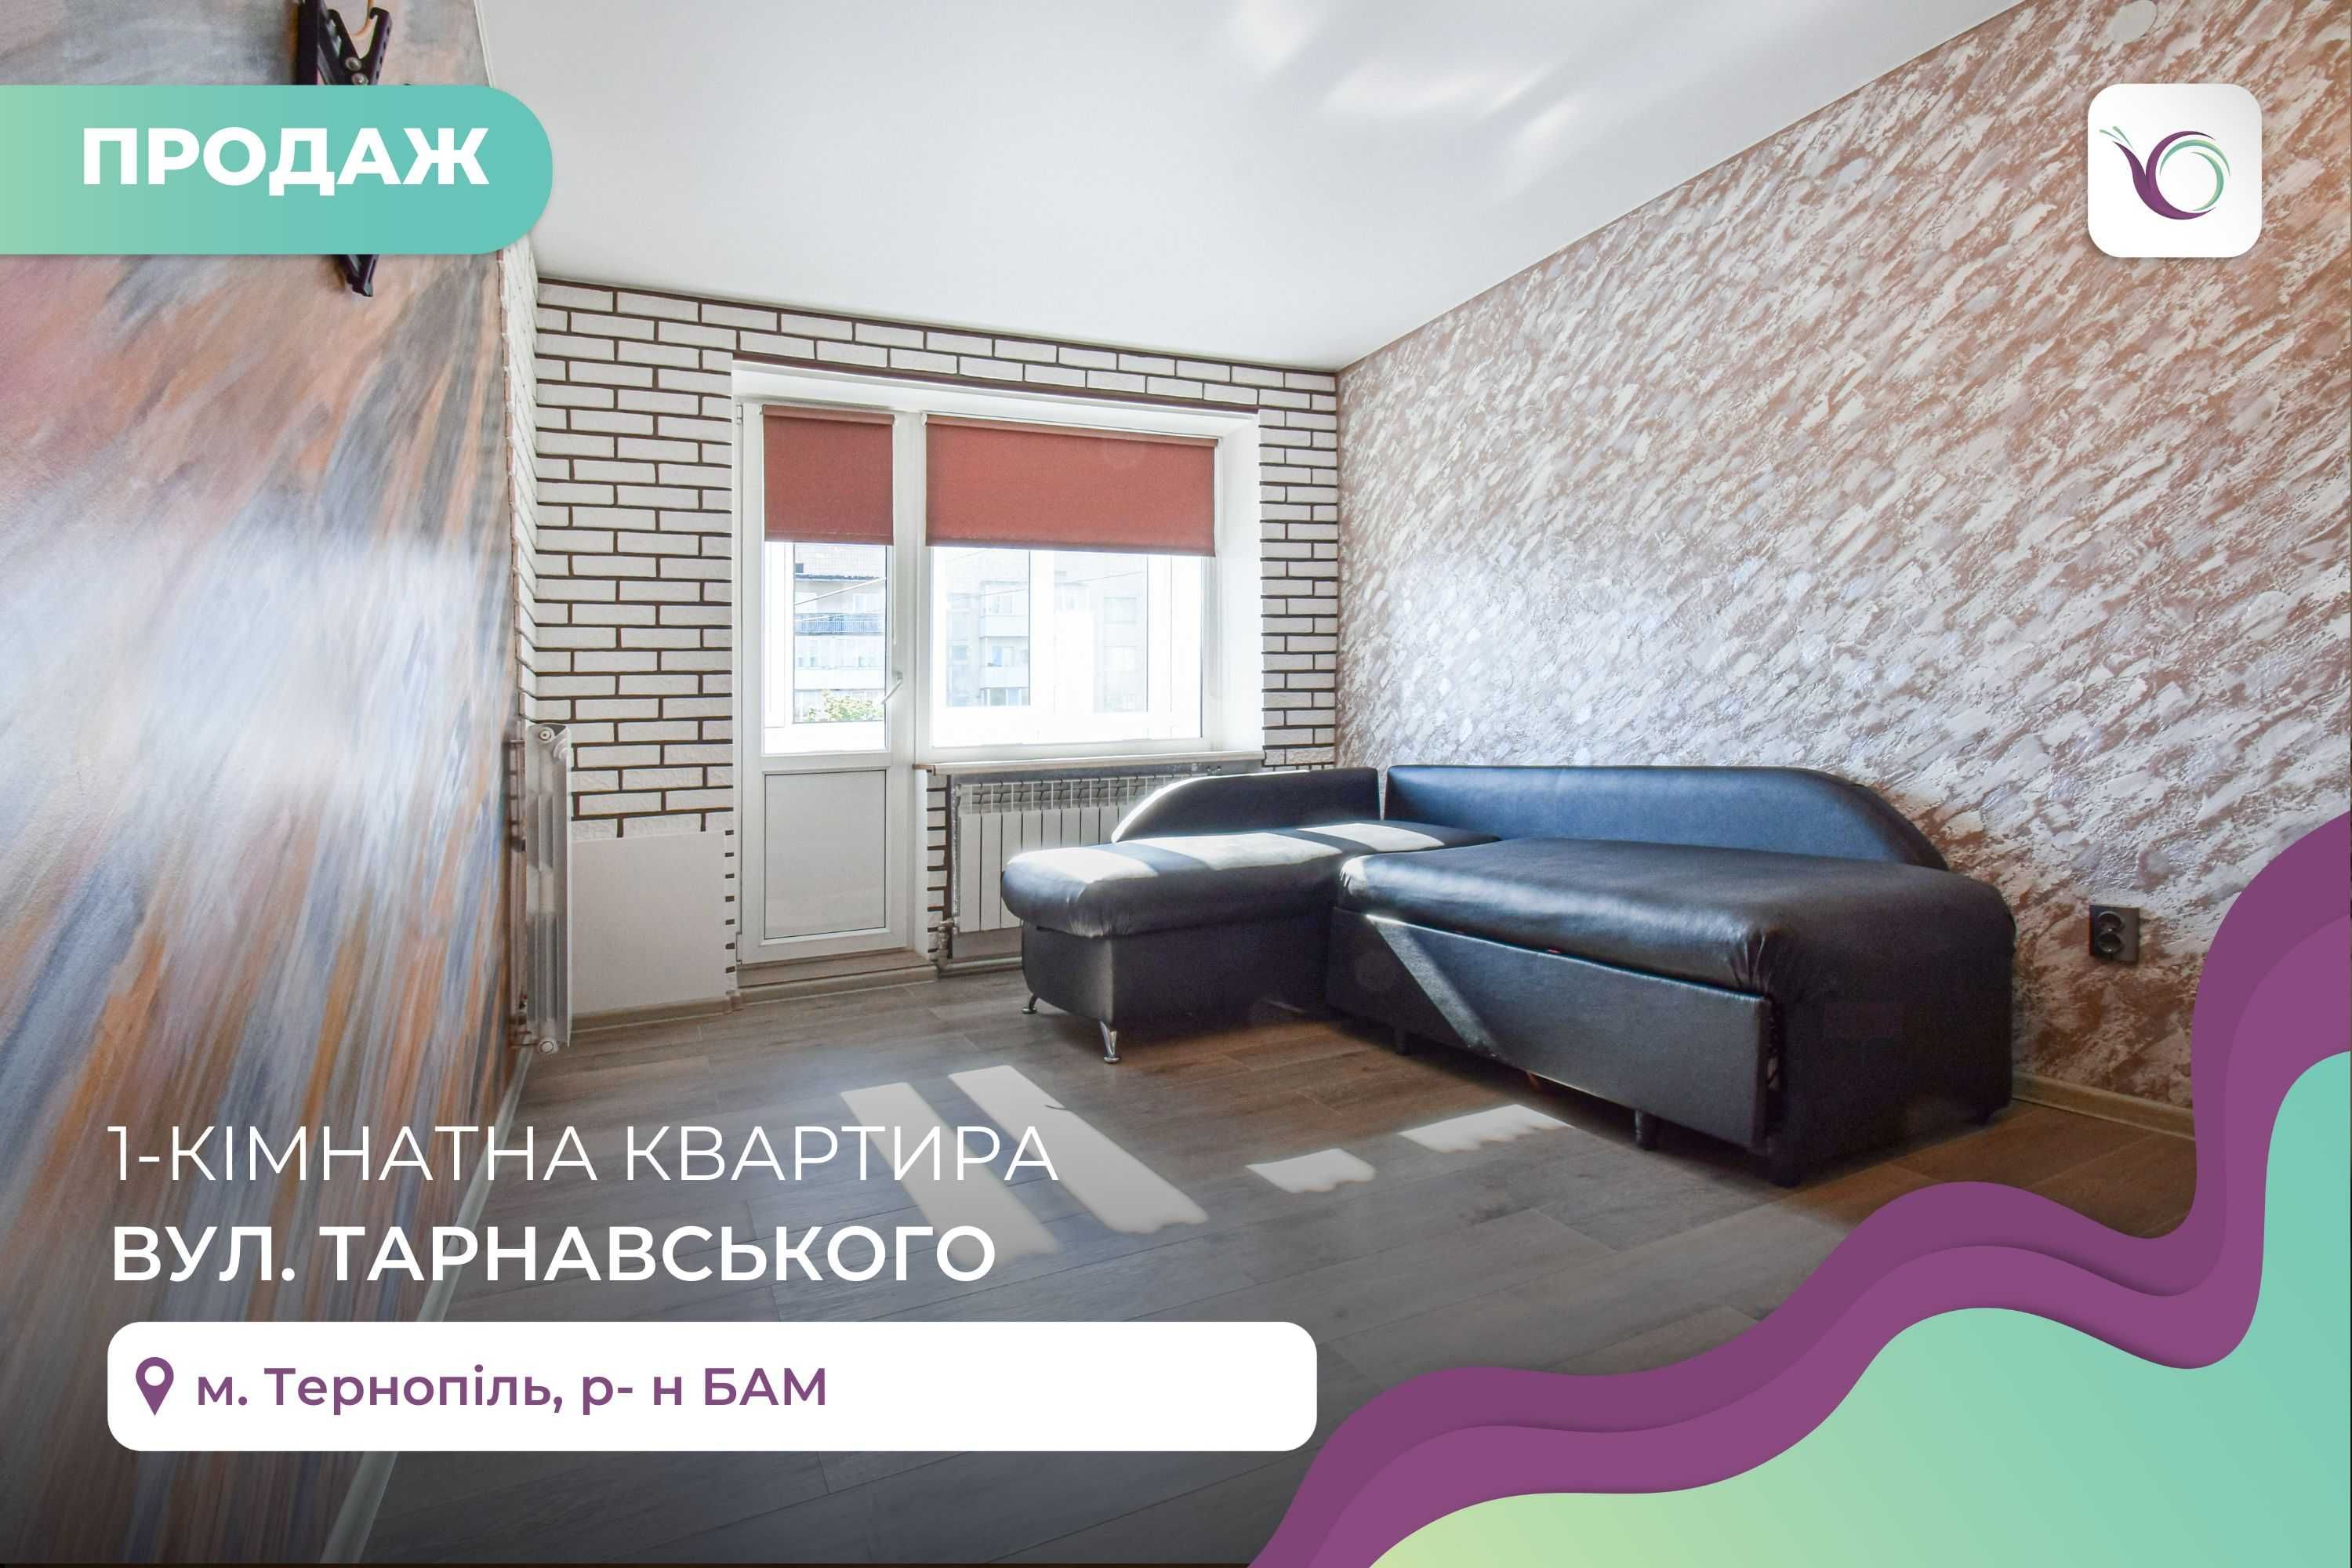 1-к. квартира 31 м2 з ремонтом, меблями за вул. Тарнавського